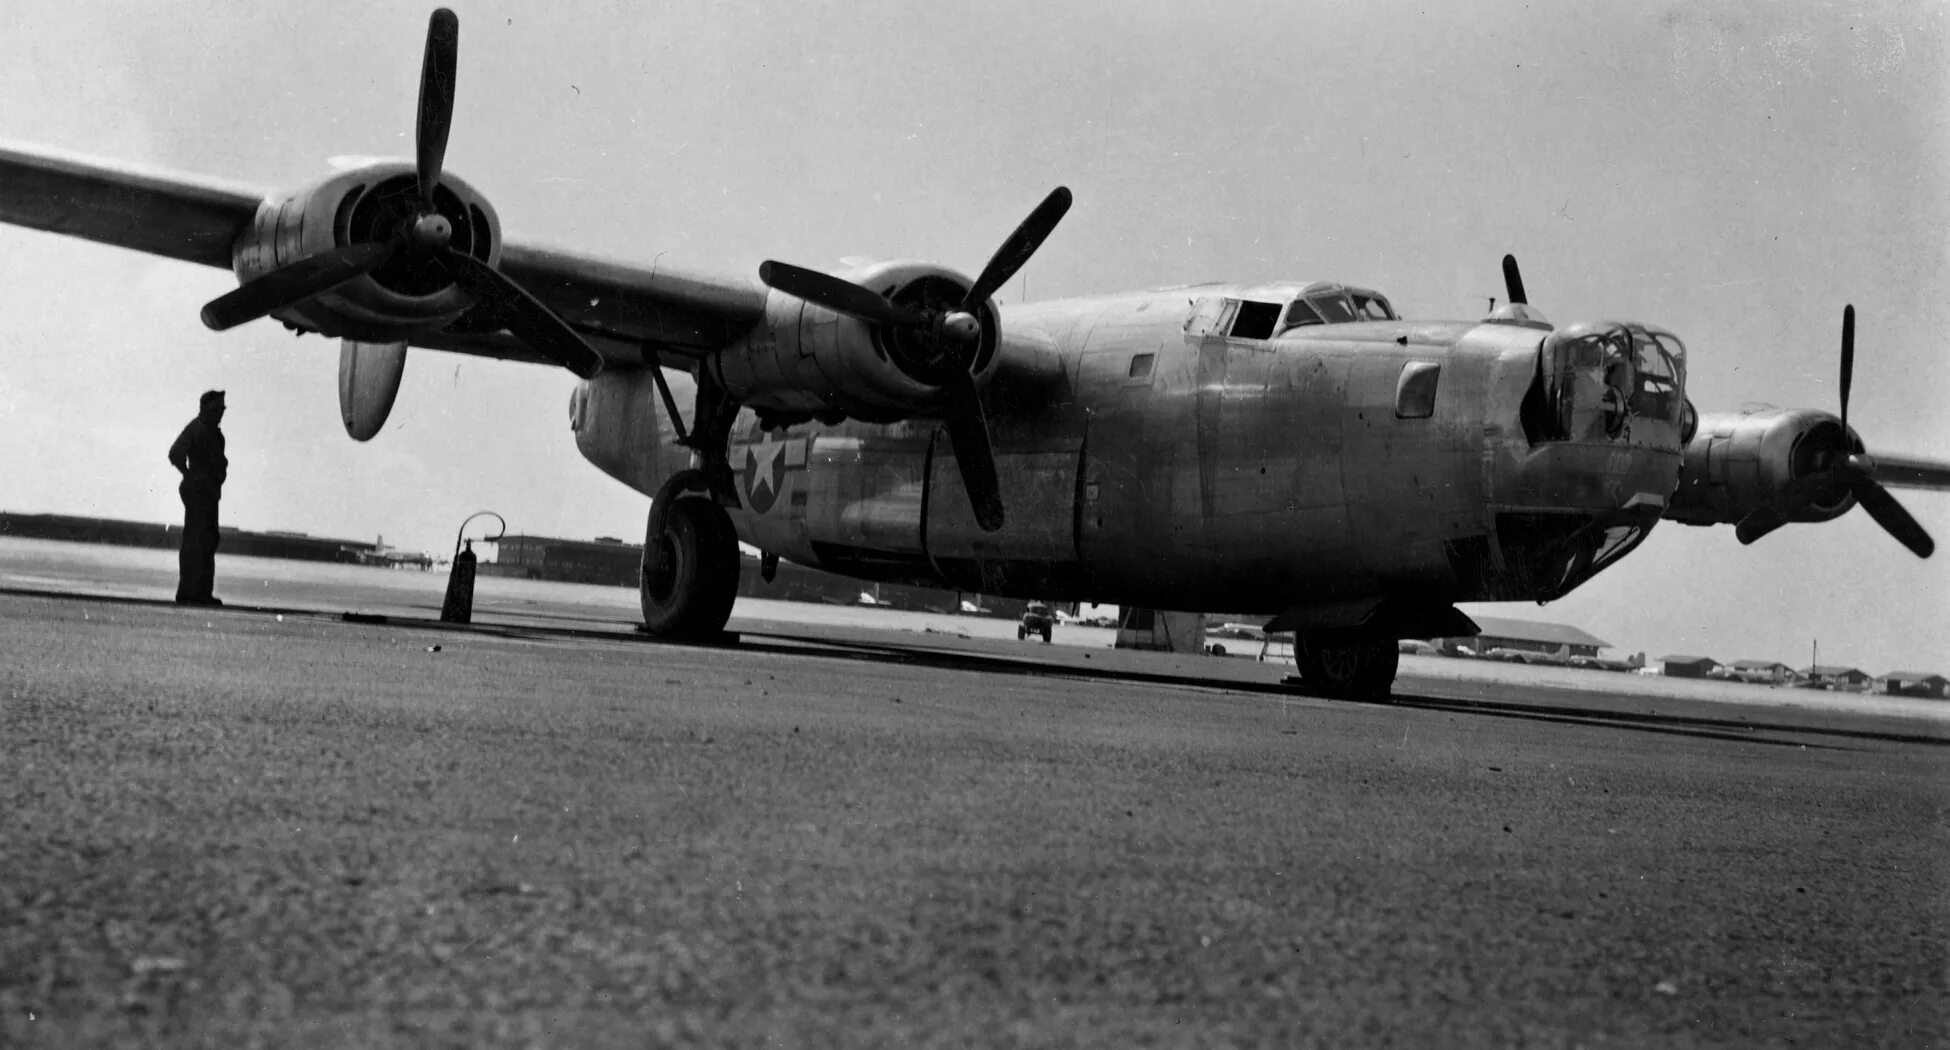 Б-24 Либерейтор. "Консолидэйтед" b-24 "Либерейтор". B-24 Bomber. Consolidated b-24 Liberator. Б 24 отзывы